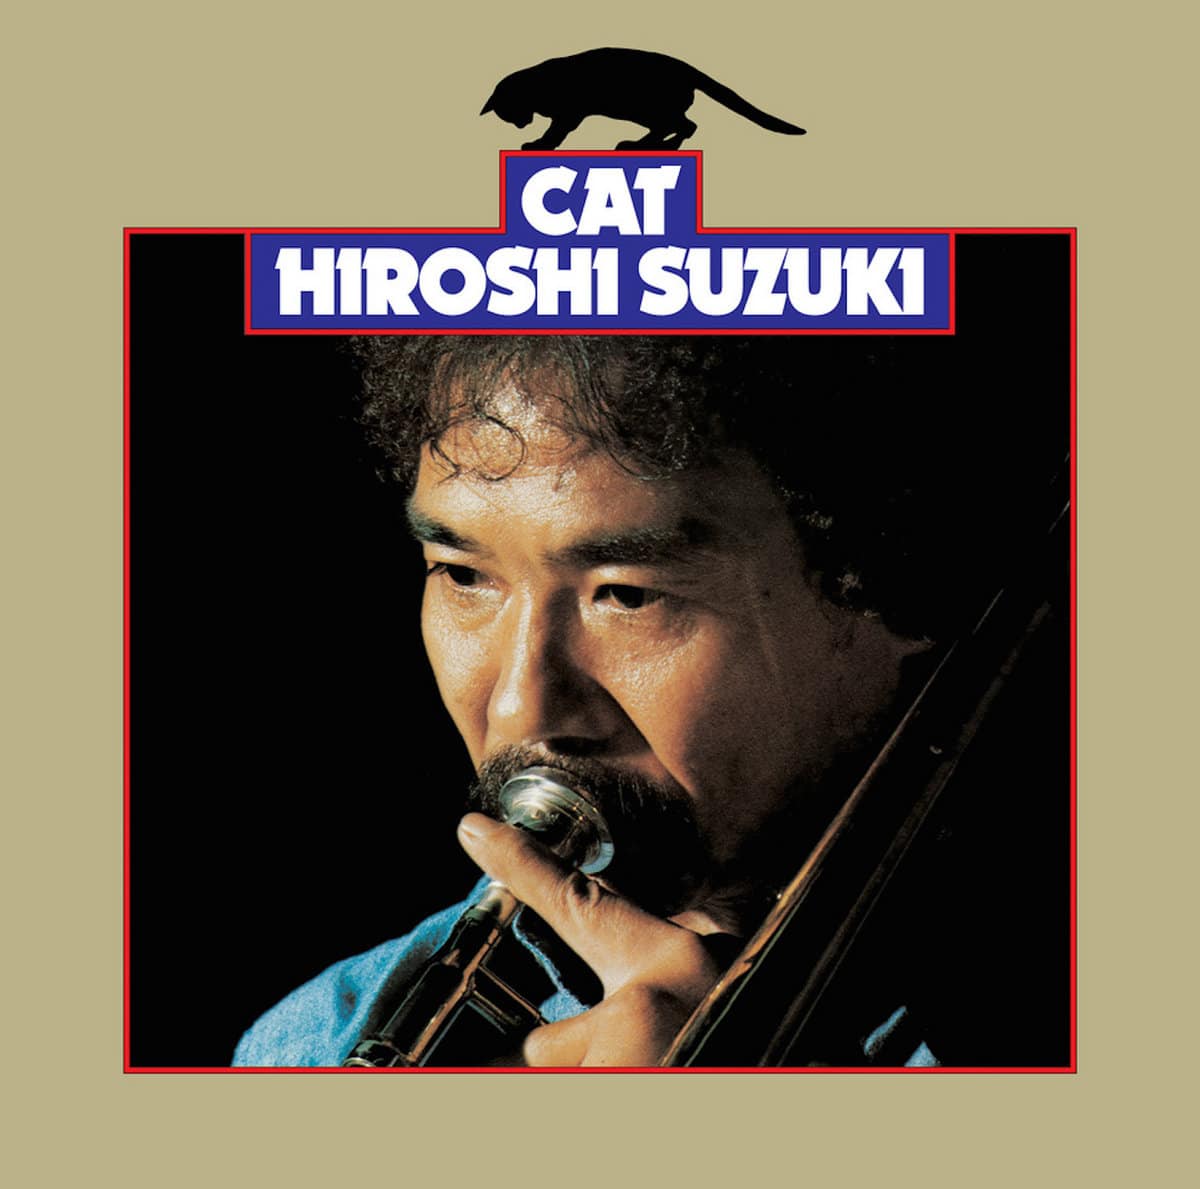 Hiroshi Suzuki - Cat - WRJ010LTD - WE RELEASE WHATEVER THE FUCK WE WANT